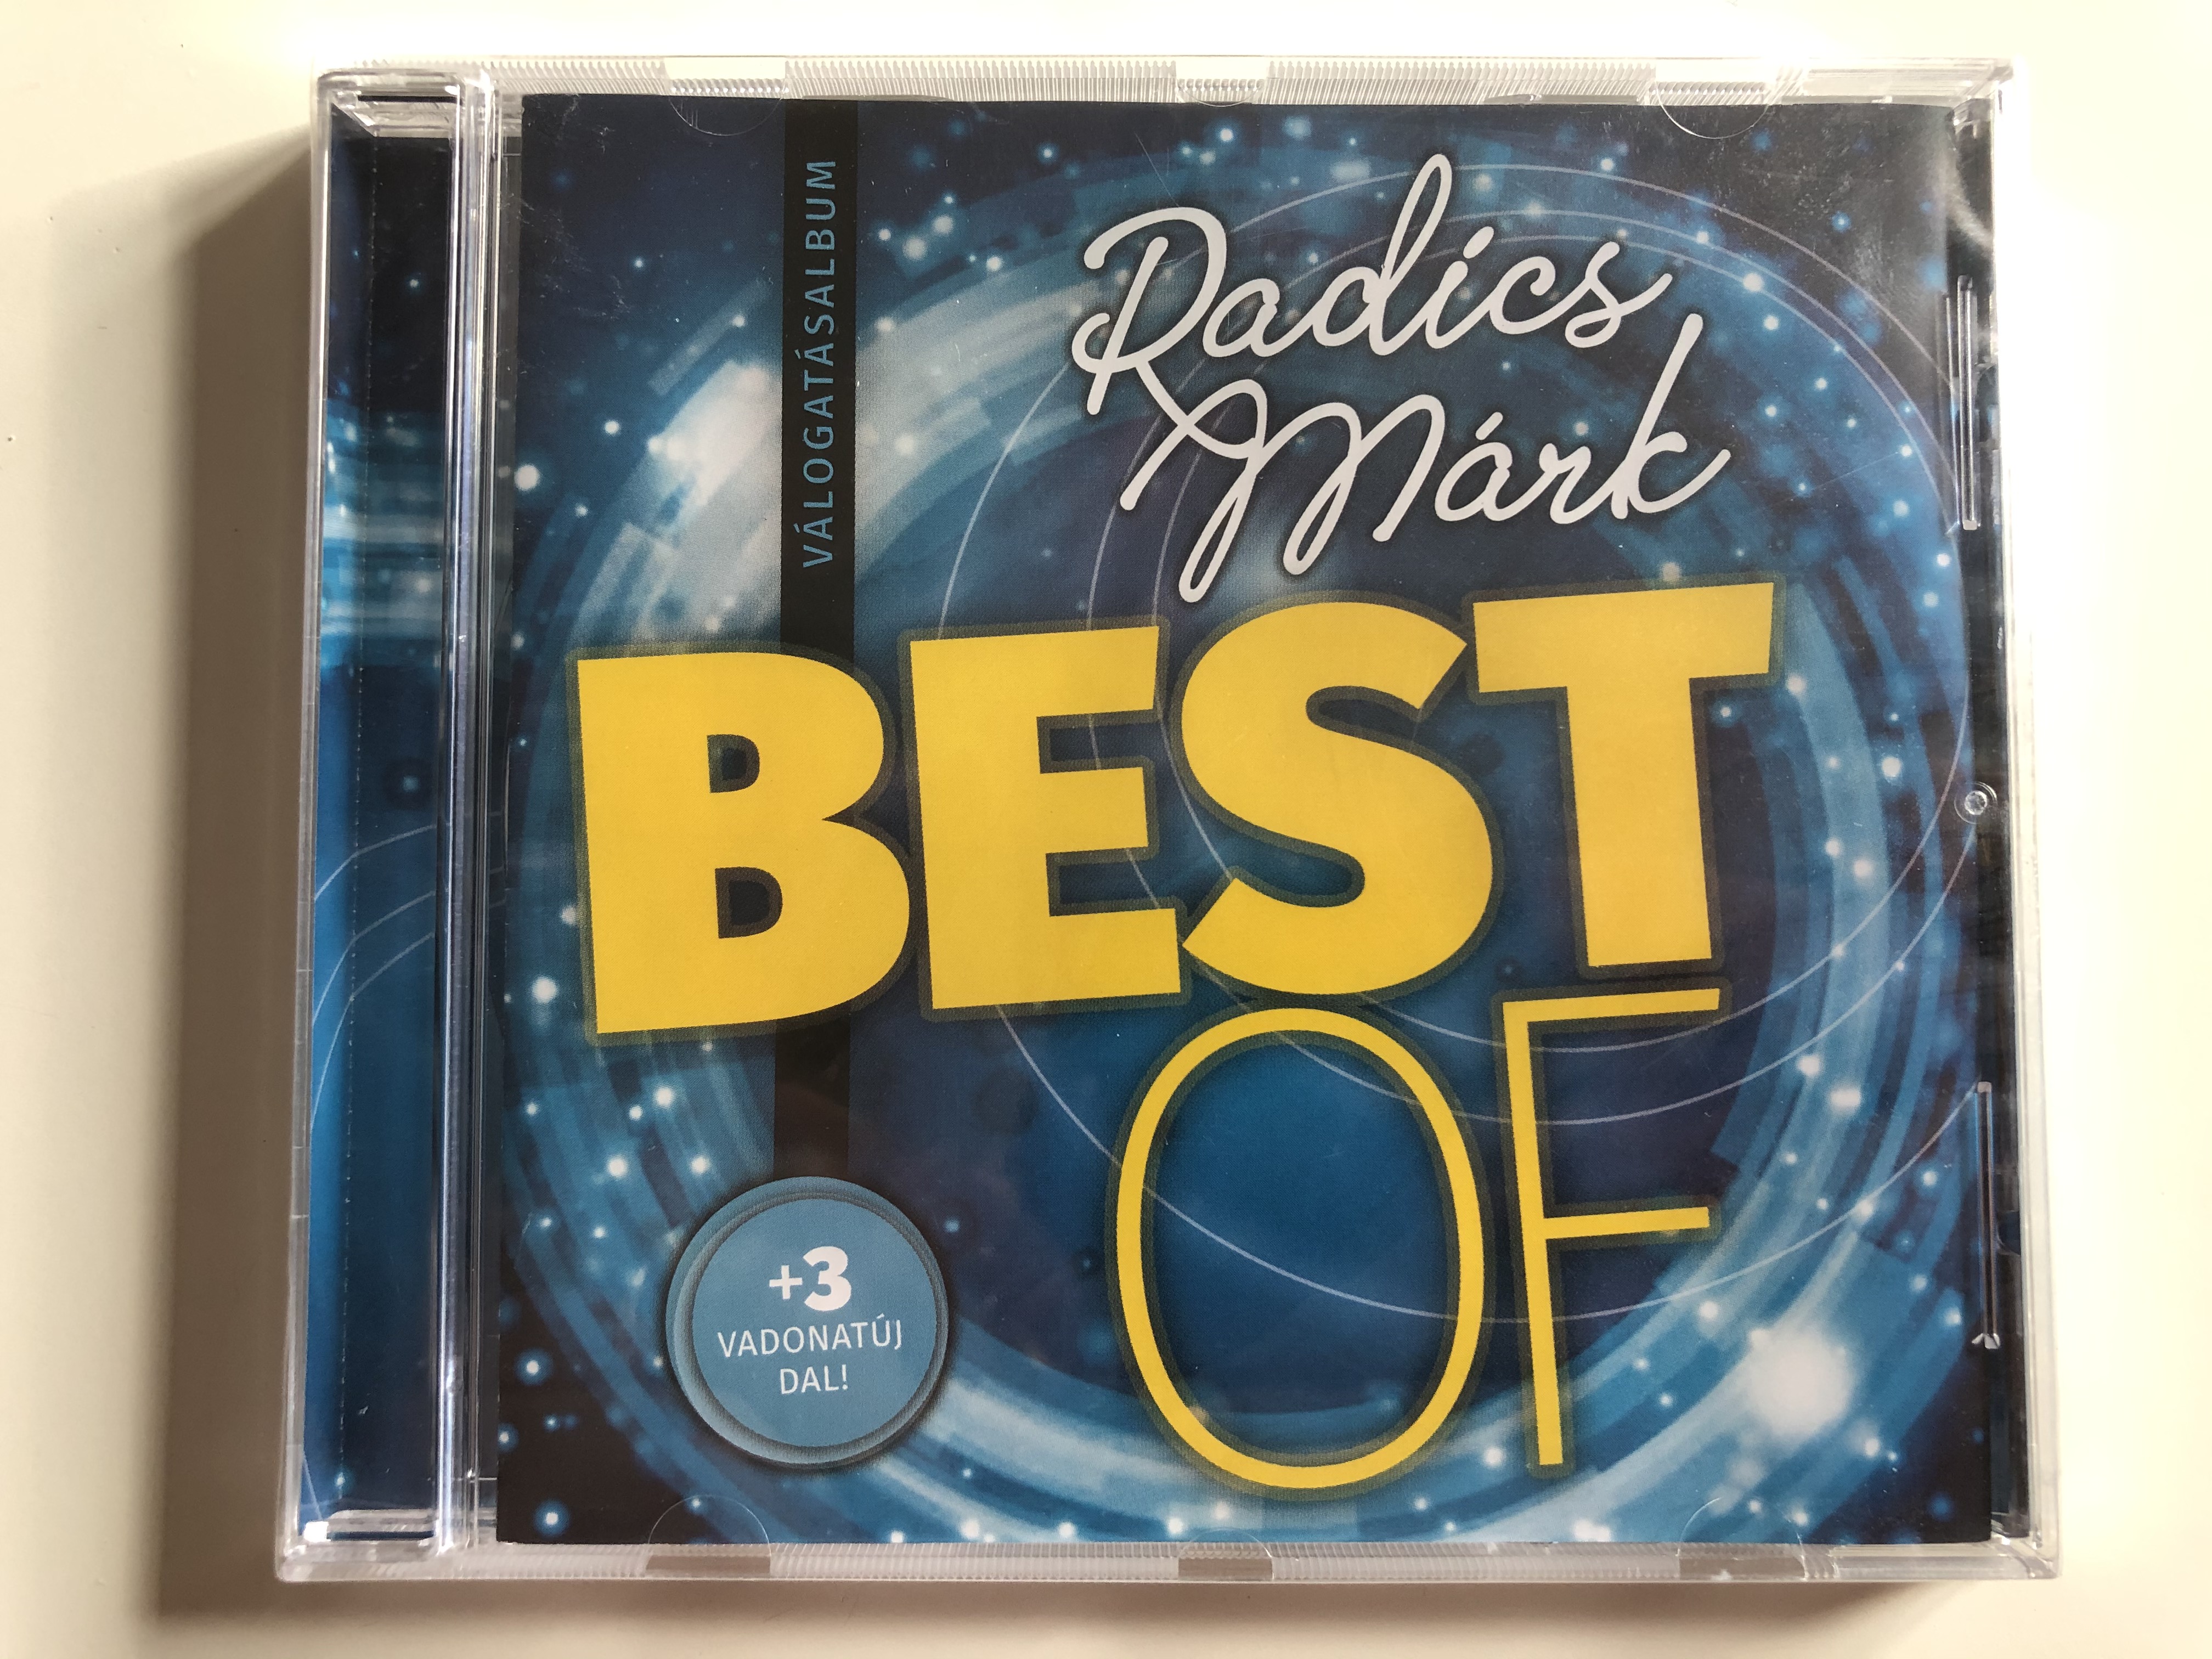 radics-m-rk-best-of-valogatasalbum-3-vadonatuj-dal-trimedio-records-kft.-audio-cd-2018-lr032-1-.jpg